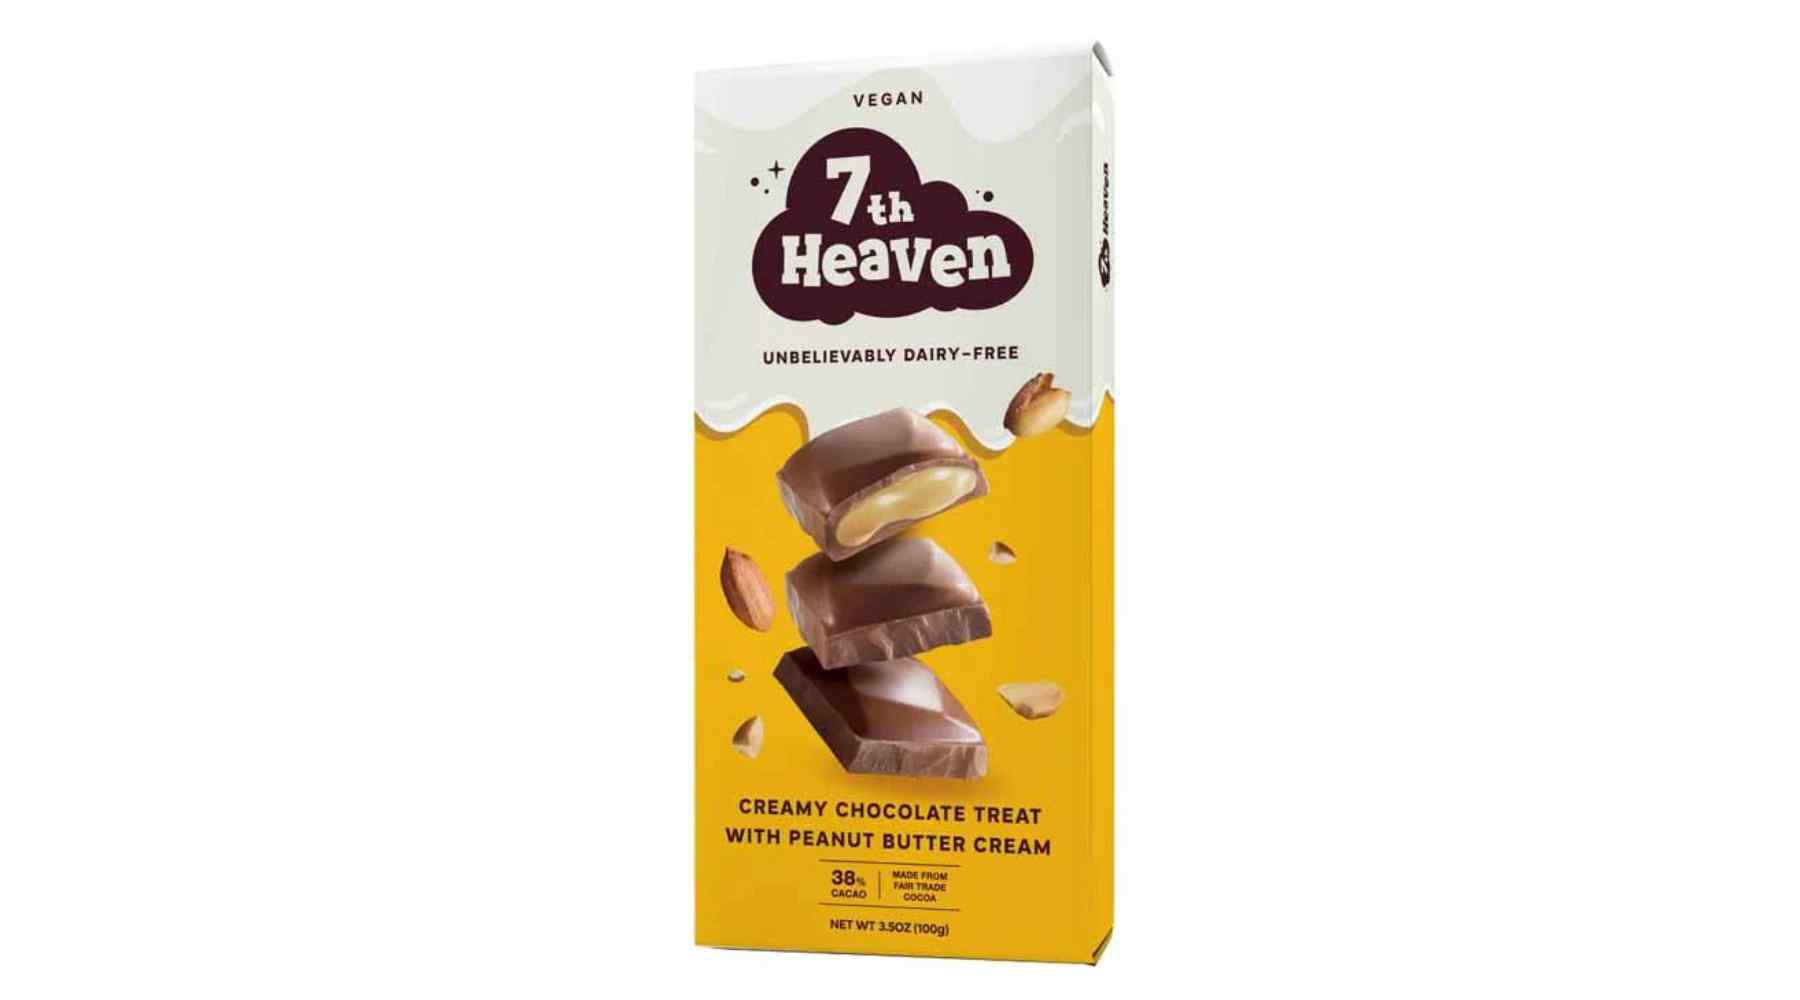 7th heaven creamy chocolate treat